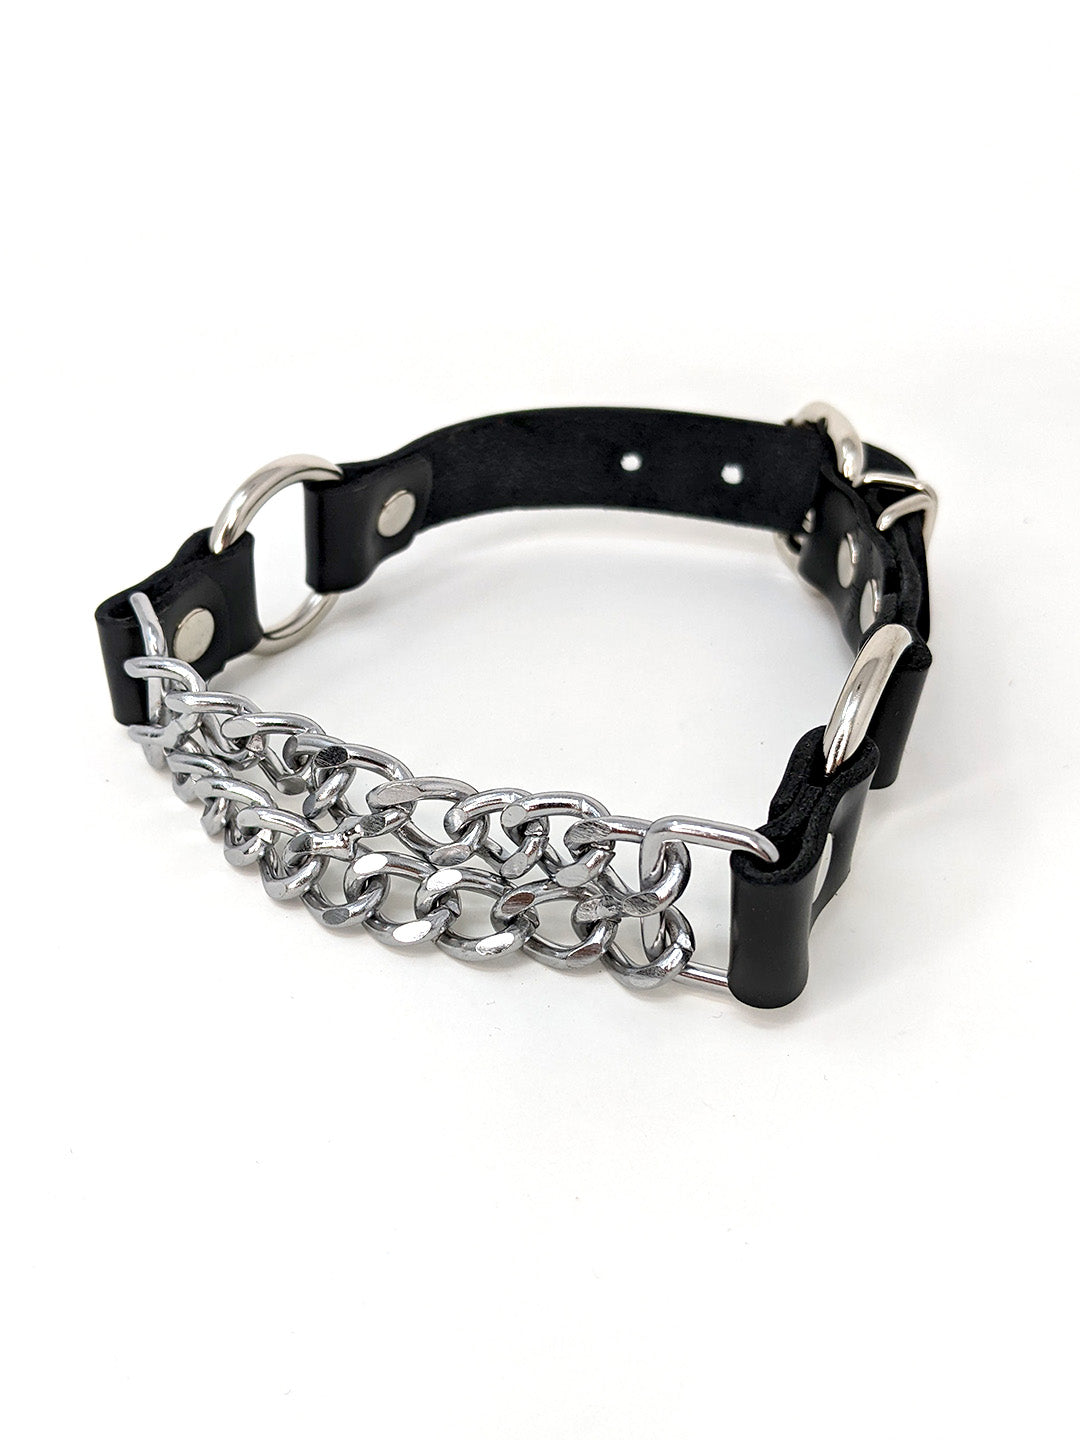 Double Chain Halter Ring Collar